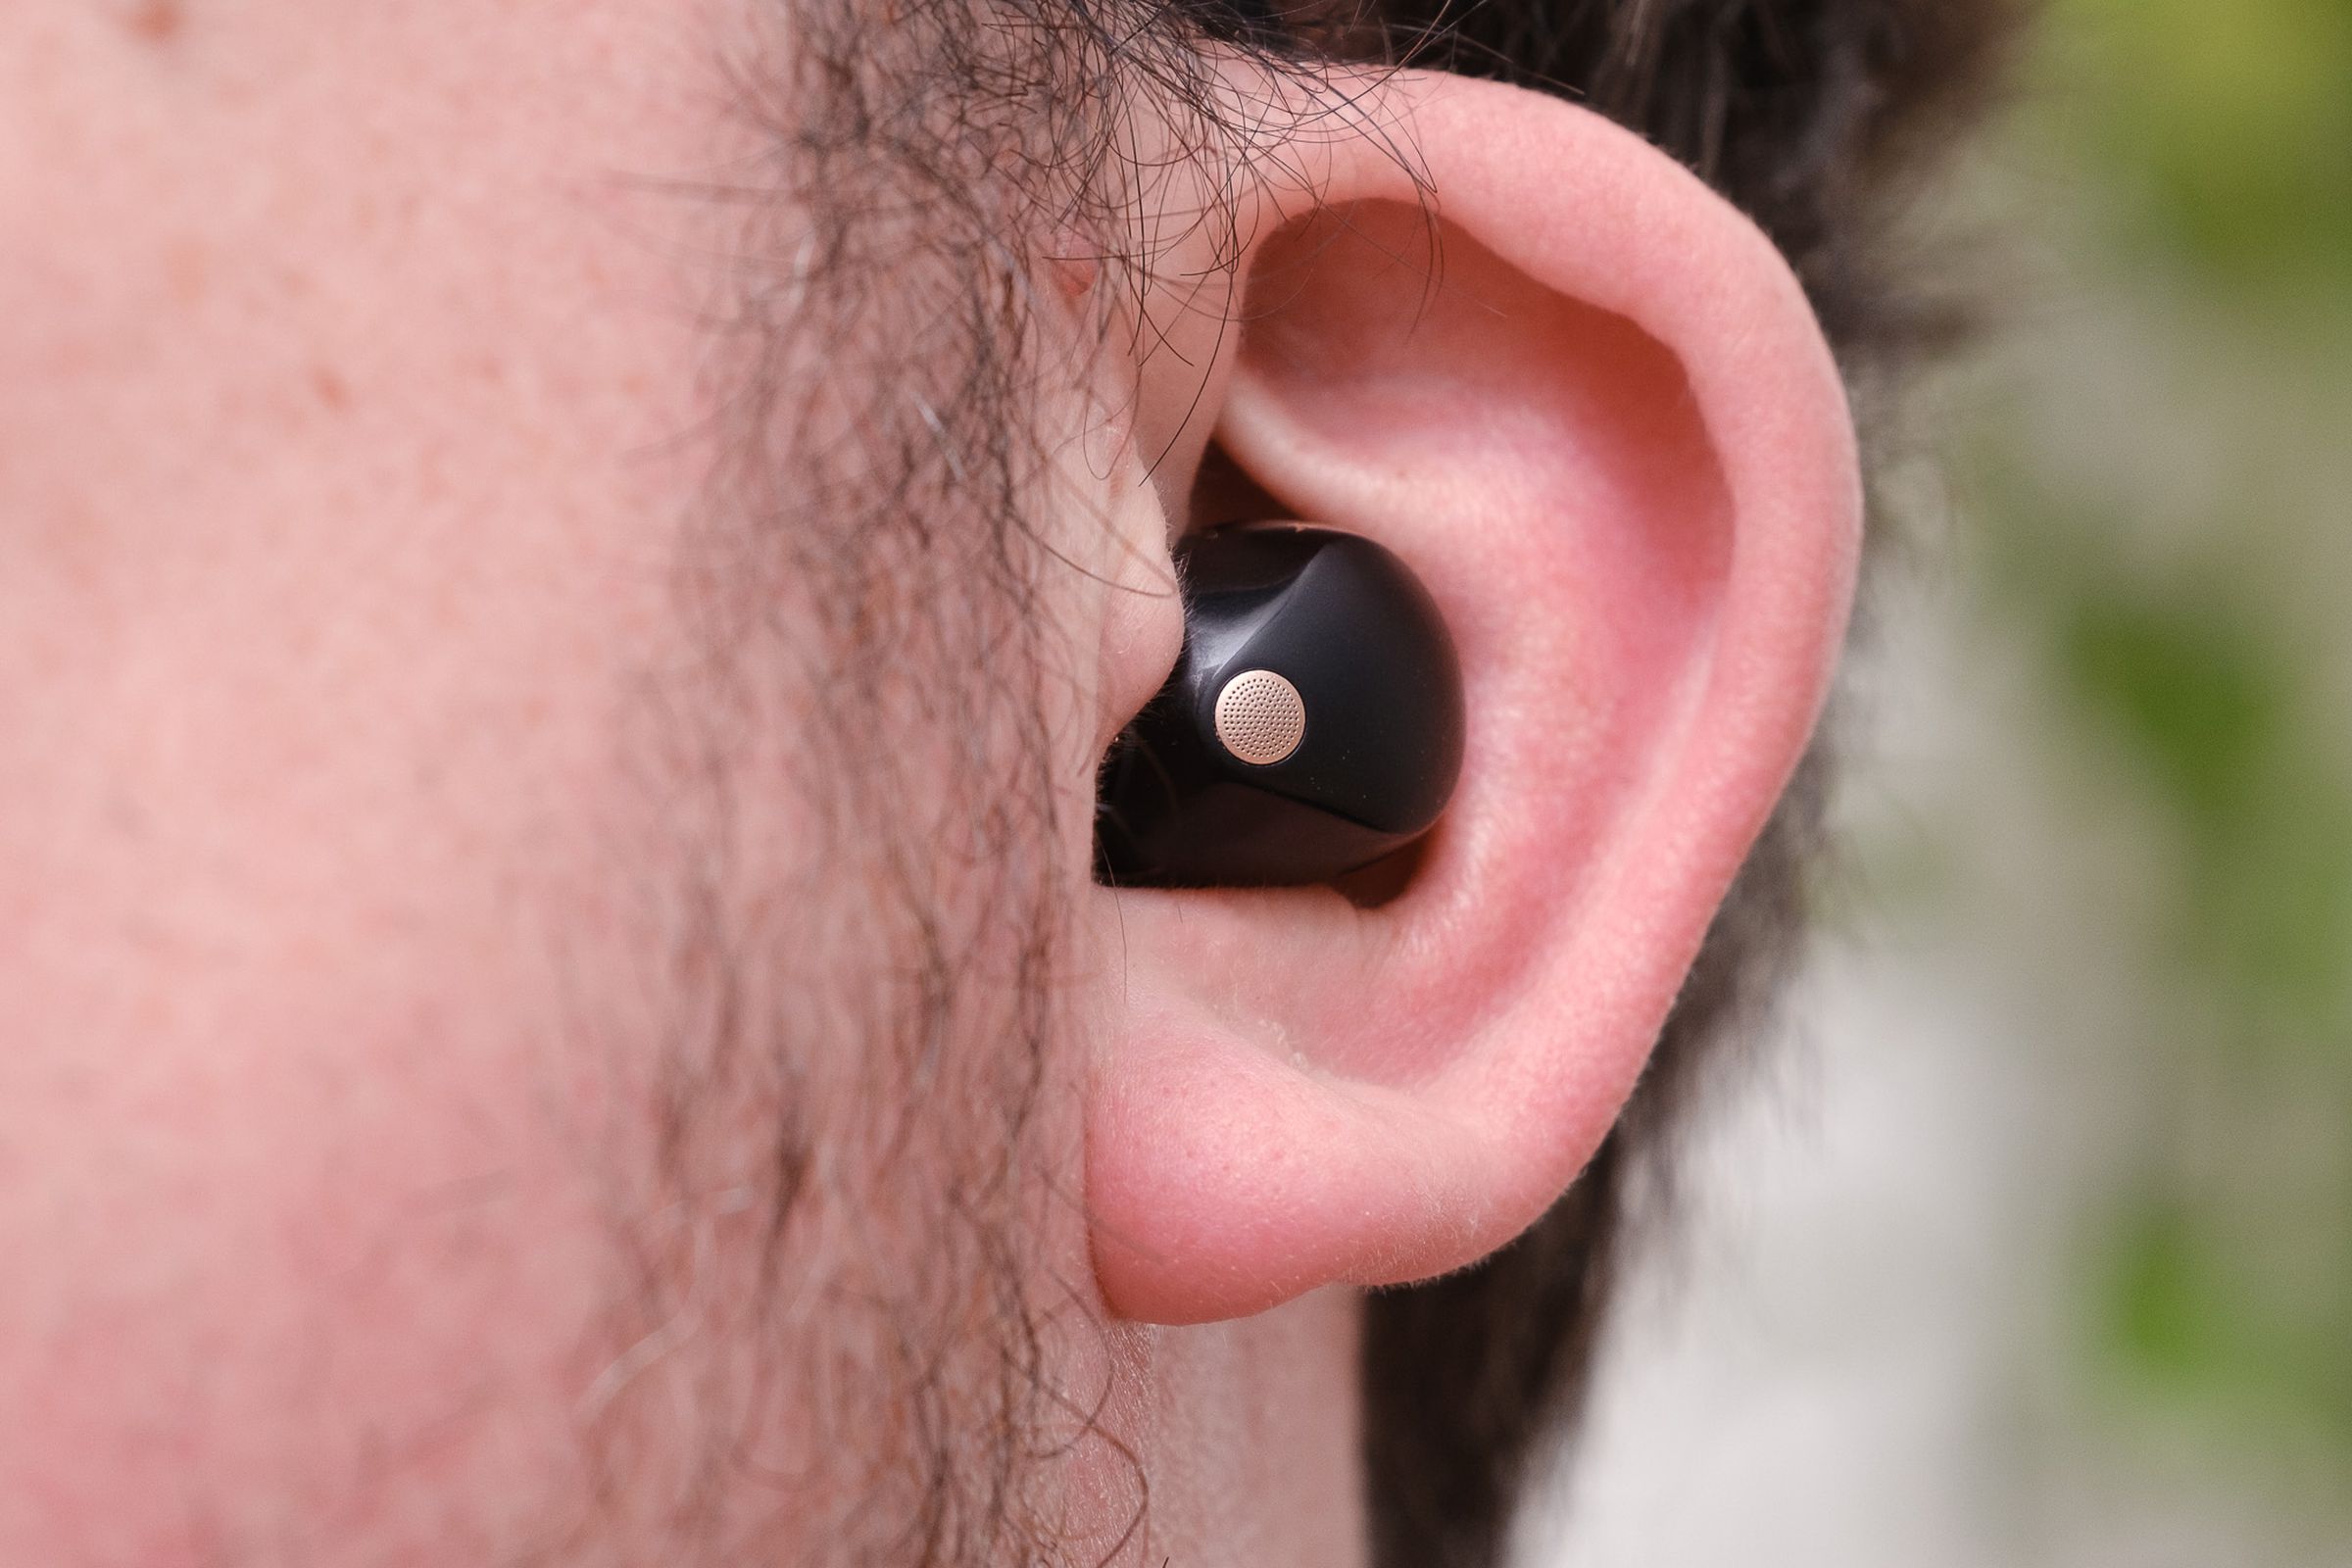 A photo of Sony’s WF-1000XM5 earbuds.